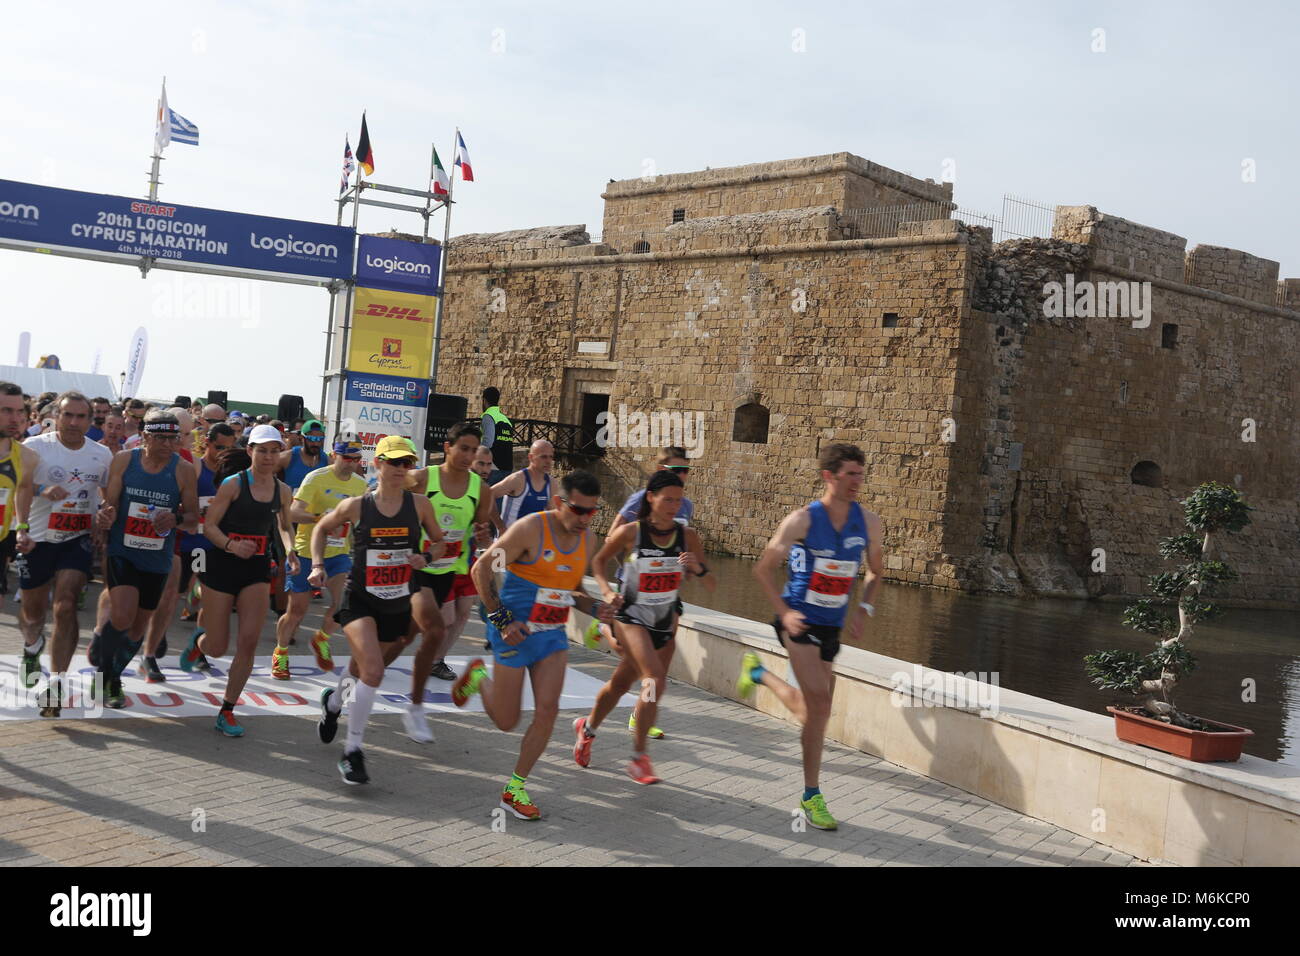 20th Logicom Cyprus marathon, half marathon, 10KM, 5KM fun run Stock Photo